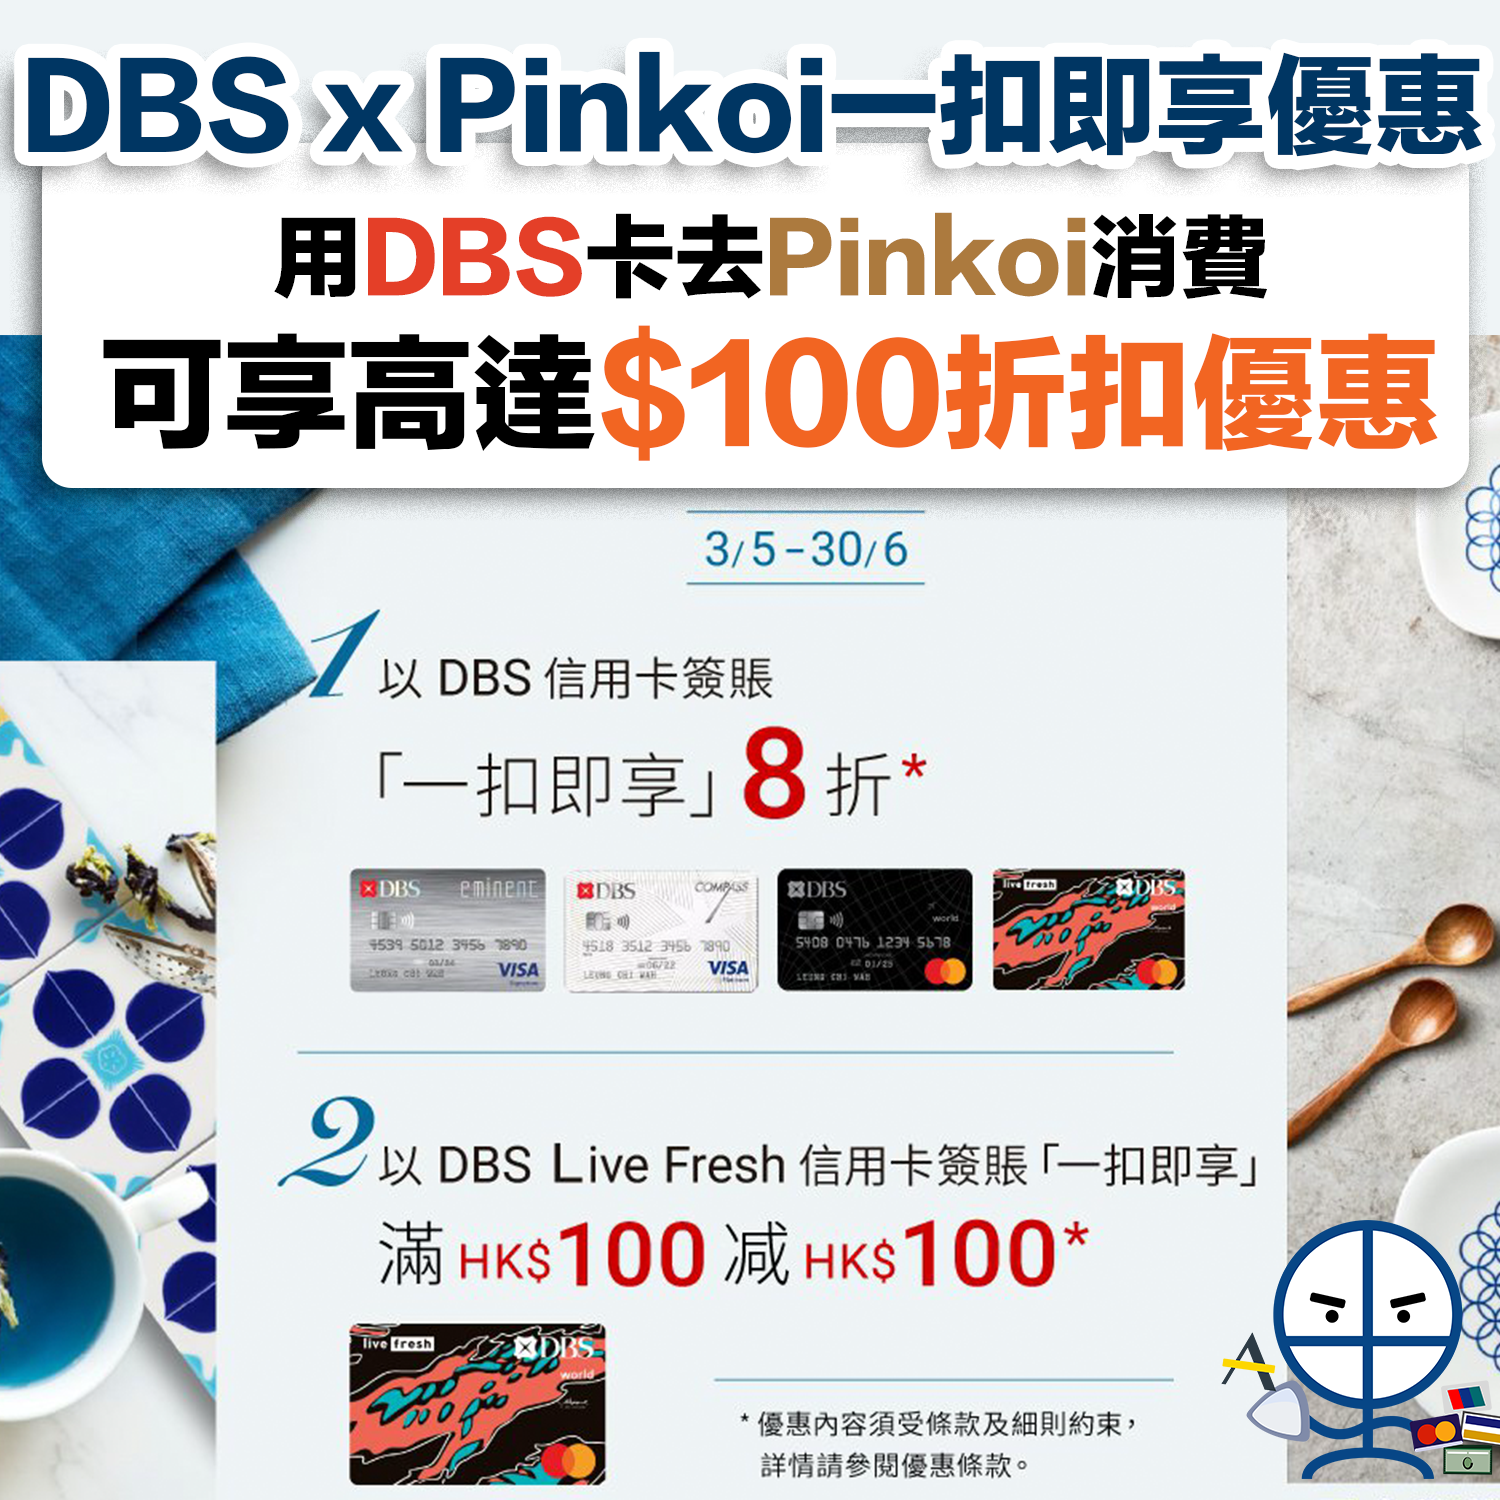 Dbs信用卡pinkoi優惠 一扣即享高達hk 100折扣優惠最高有100 回贈 里先生 Home